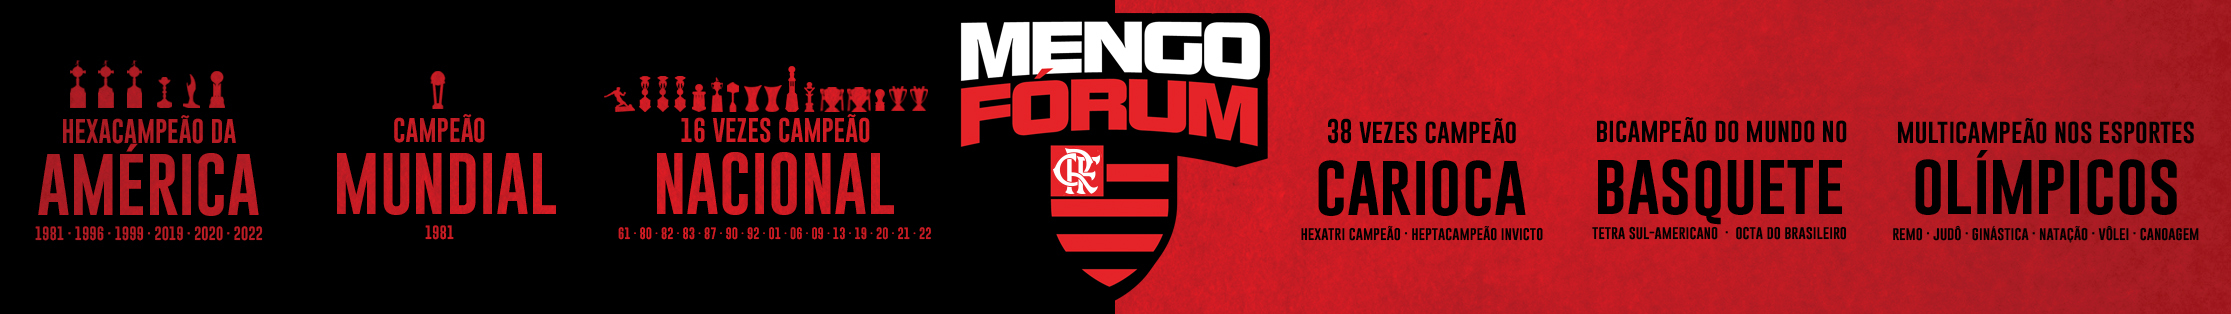 MengoForum - Fórum Flamengo